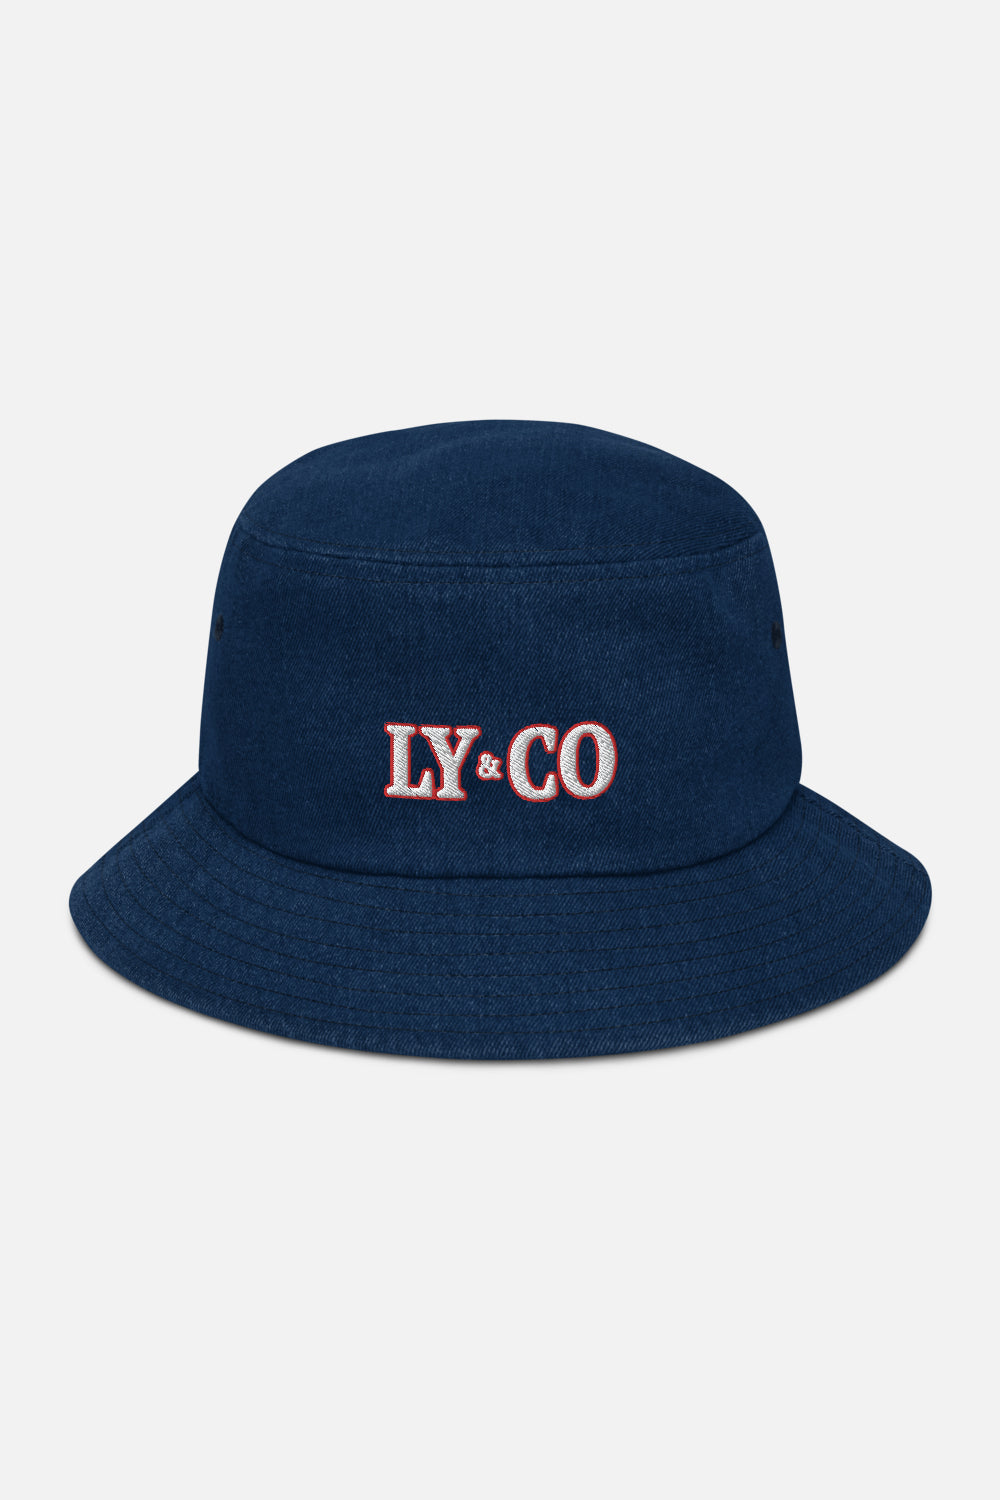 Ly&Co Denim Bucket Hat